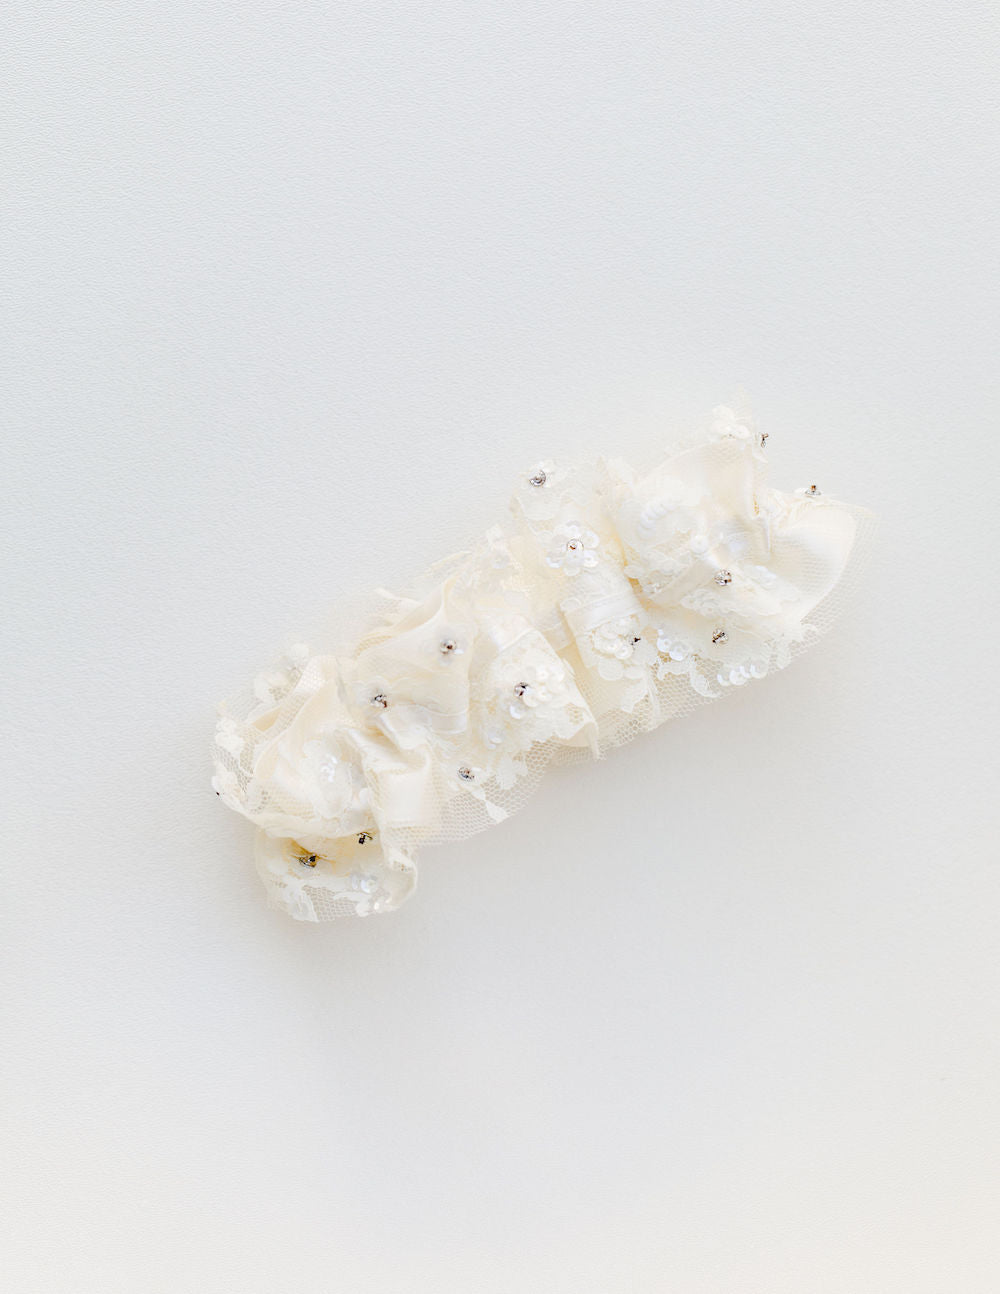 luxury sparkle lace wedding garter heirloom handmade with ivory satin by The Garter Girl